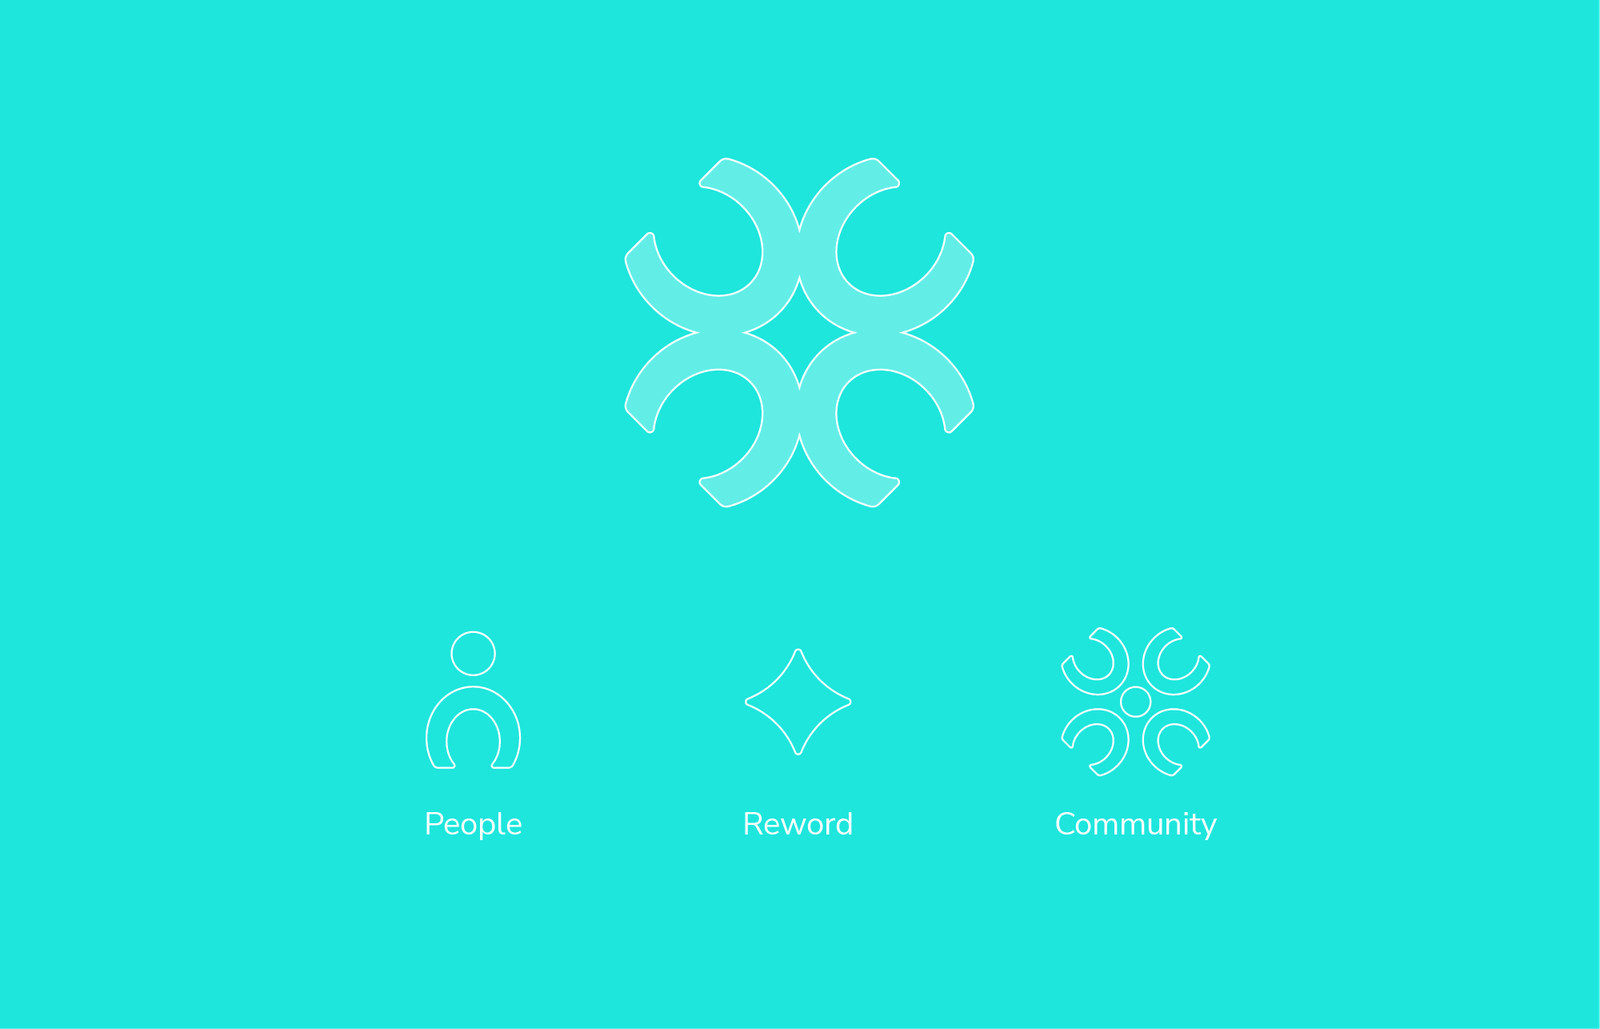 logo design concept that represents three elements: people, reword (diamond), and community